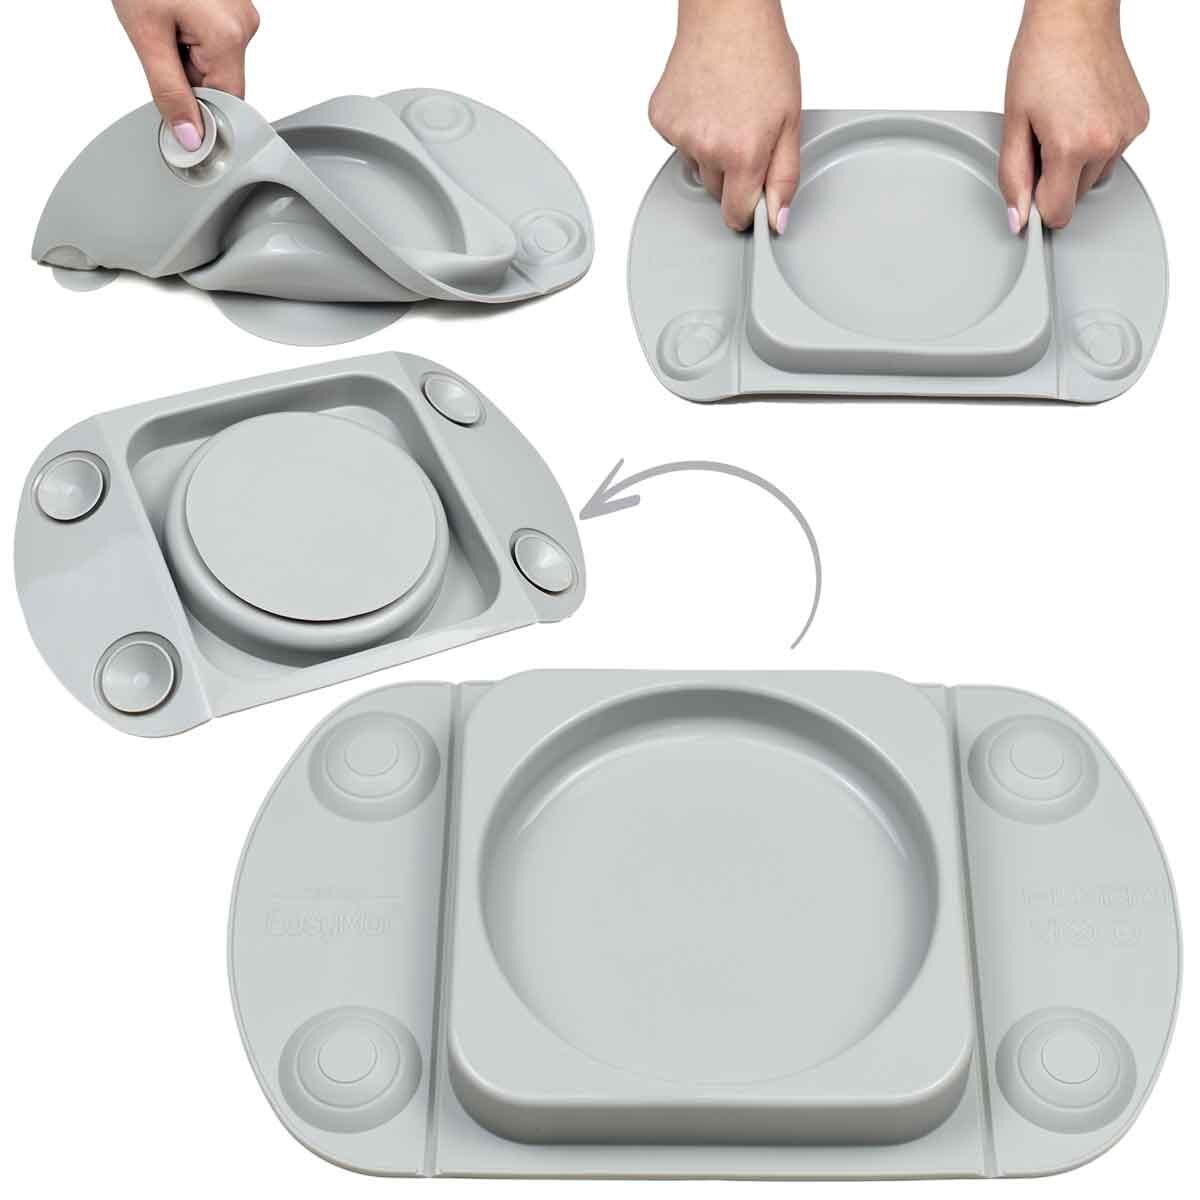 EasyTots EasyMat MiniMax Open Suction Weaning Plate in Grey